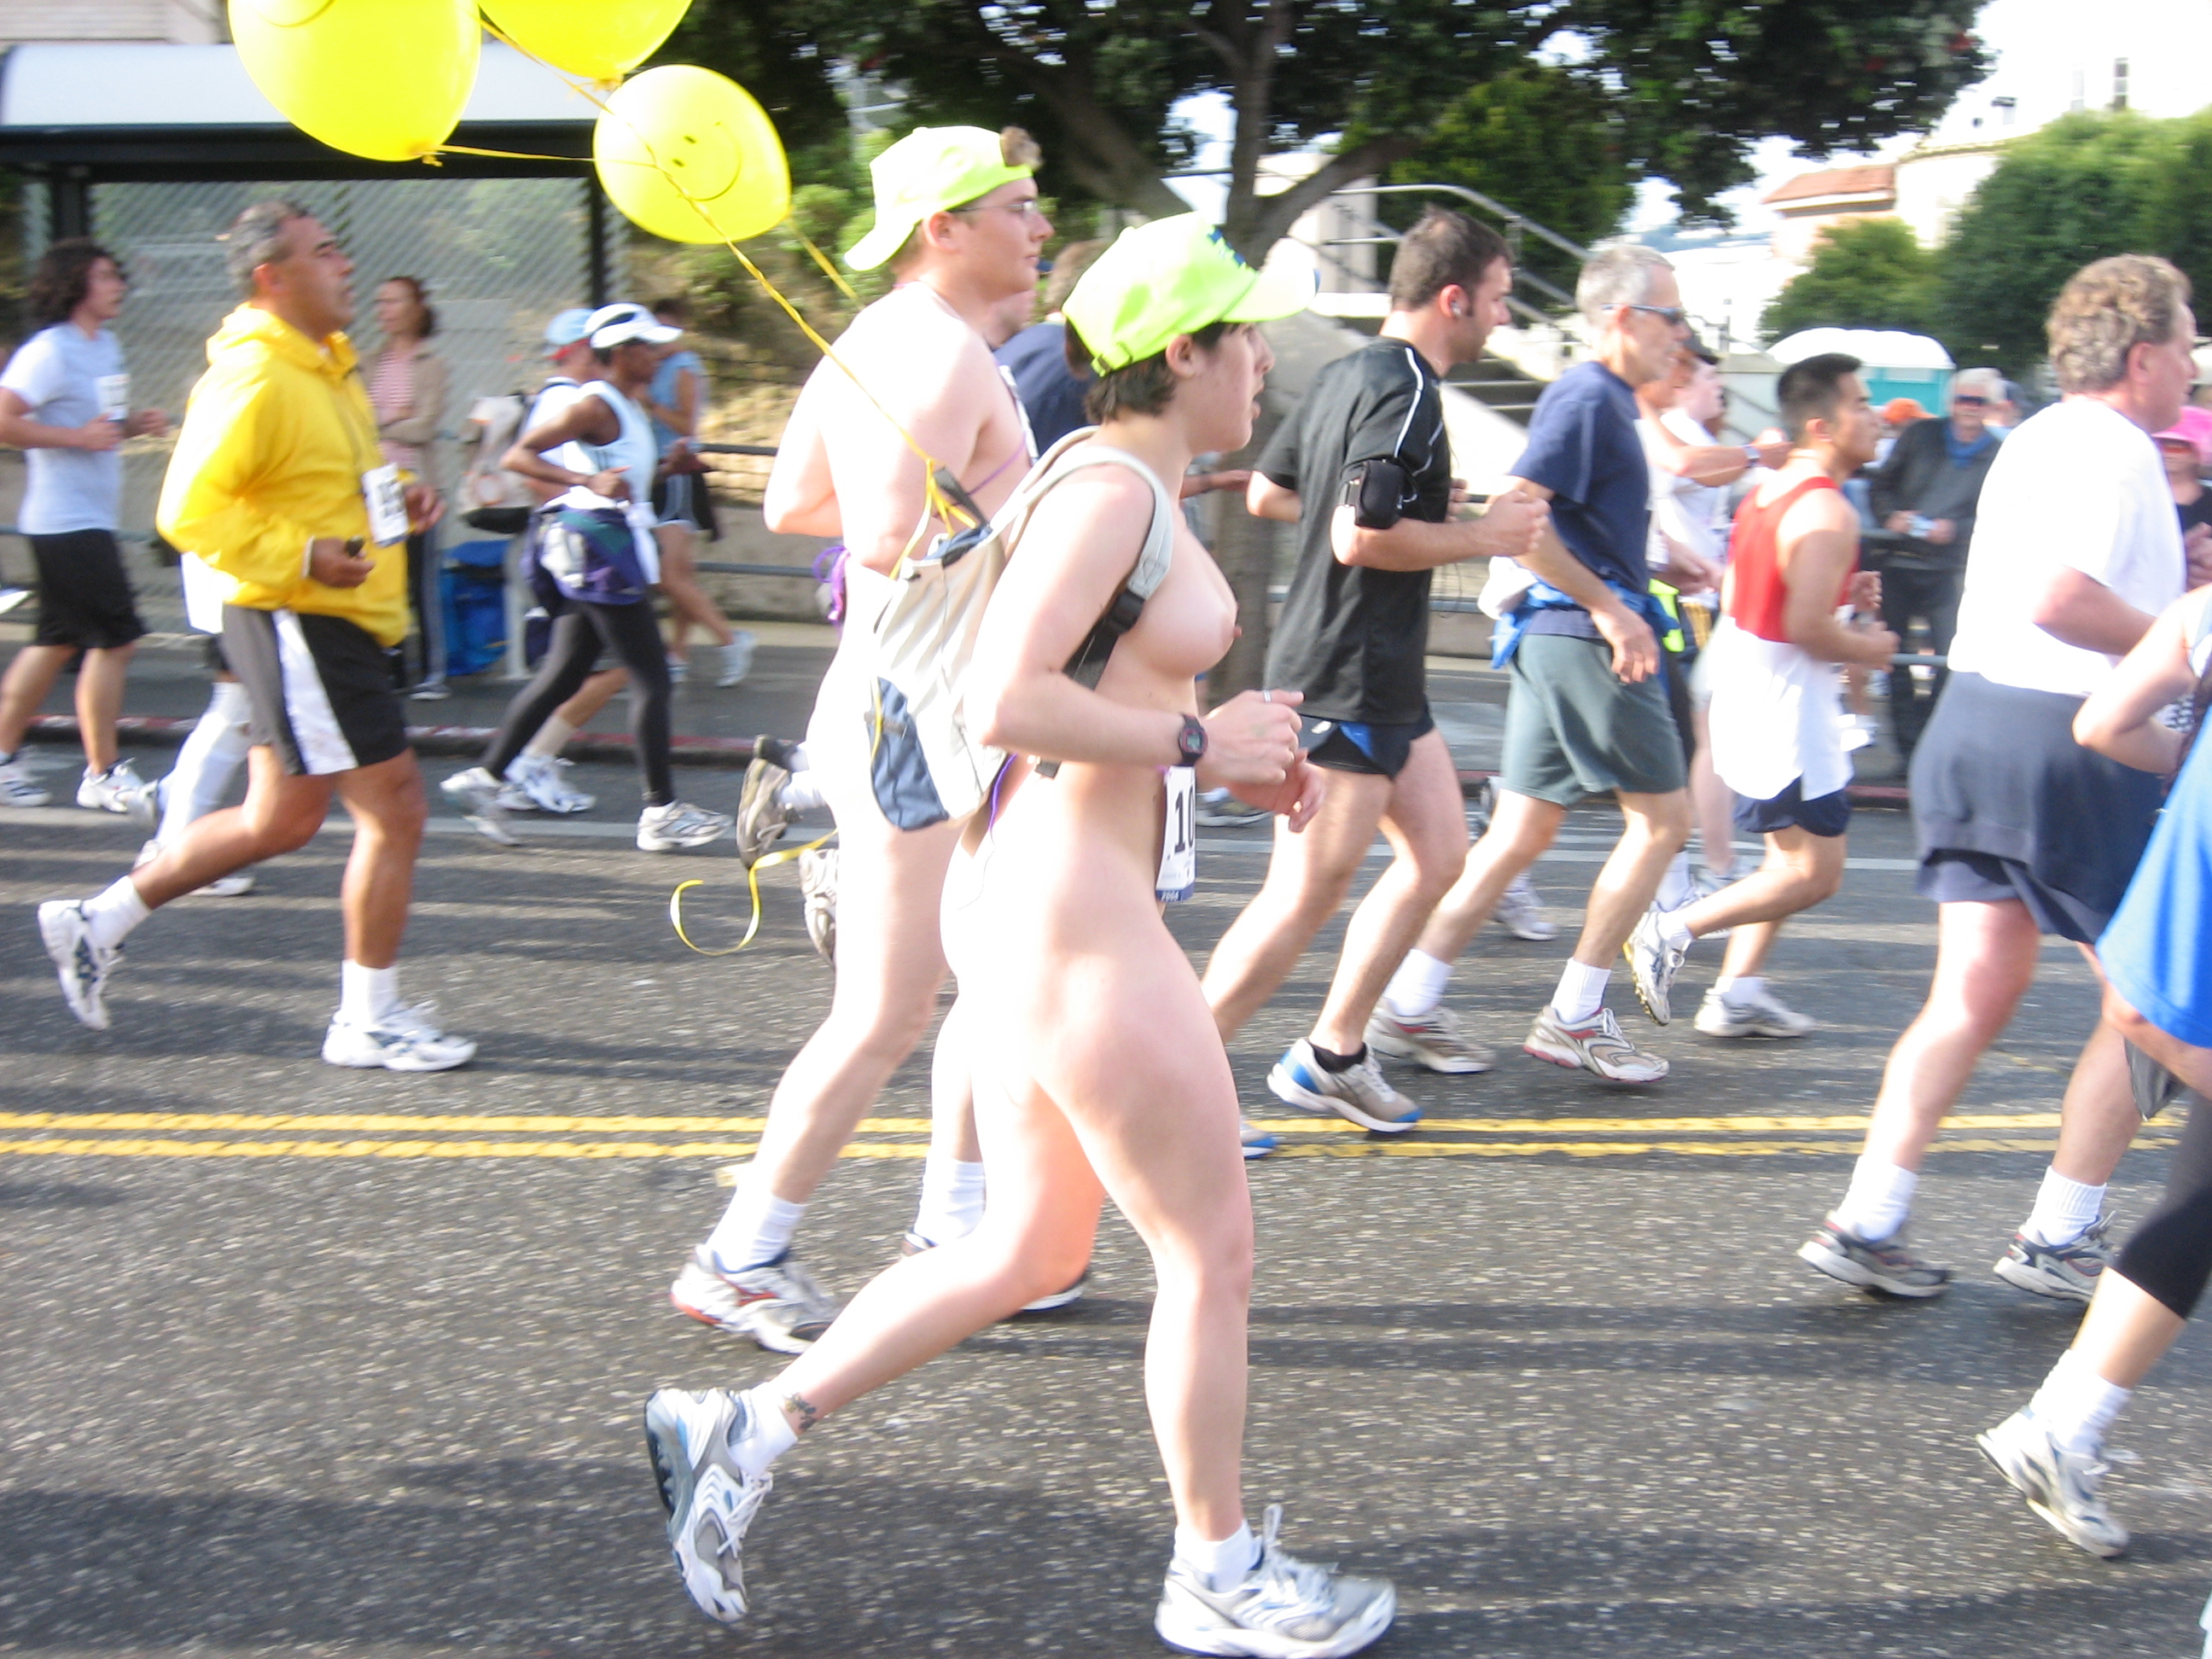 Nude Running Races 50